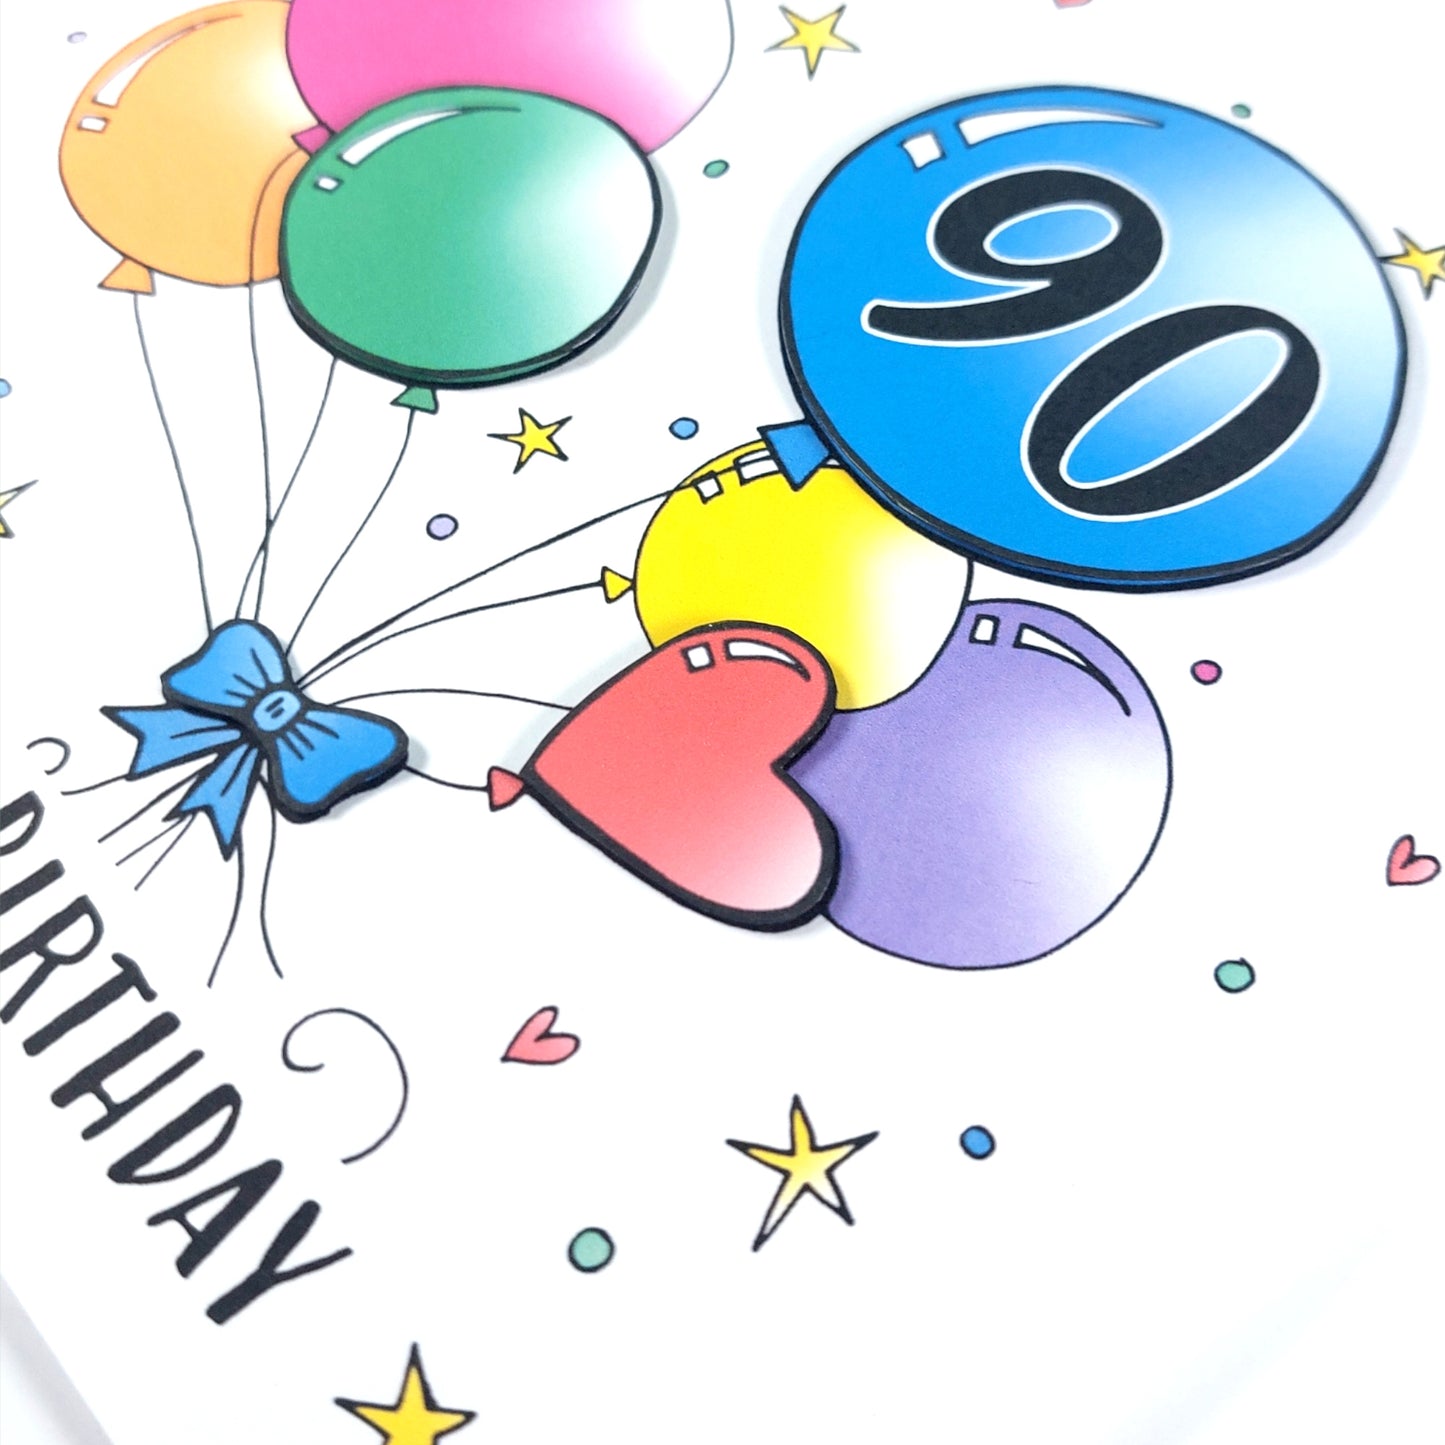 90th Balloons Birthday Card